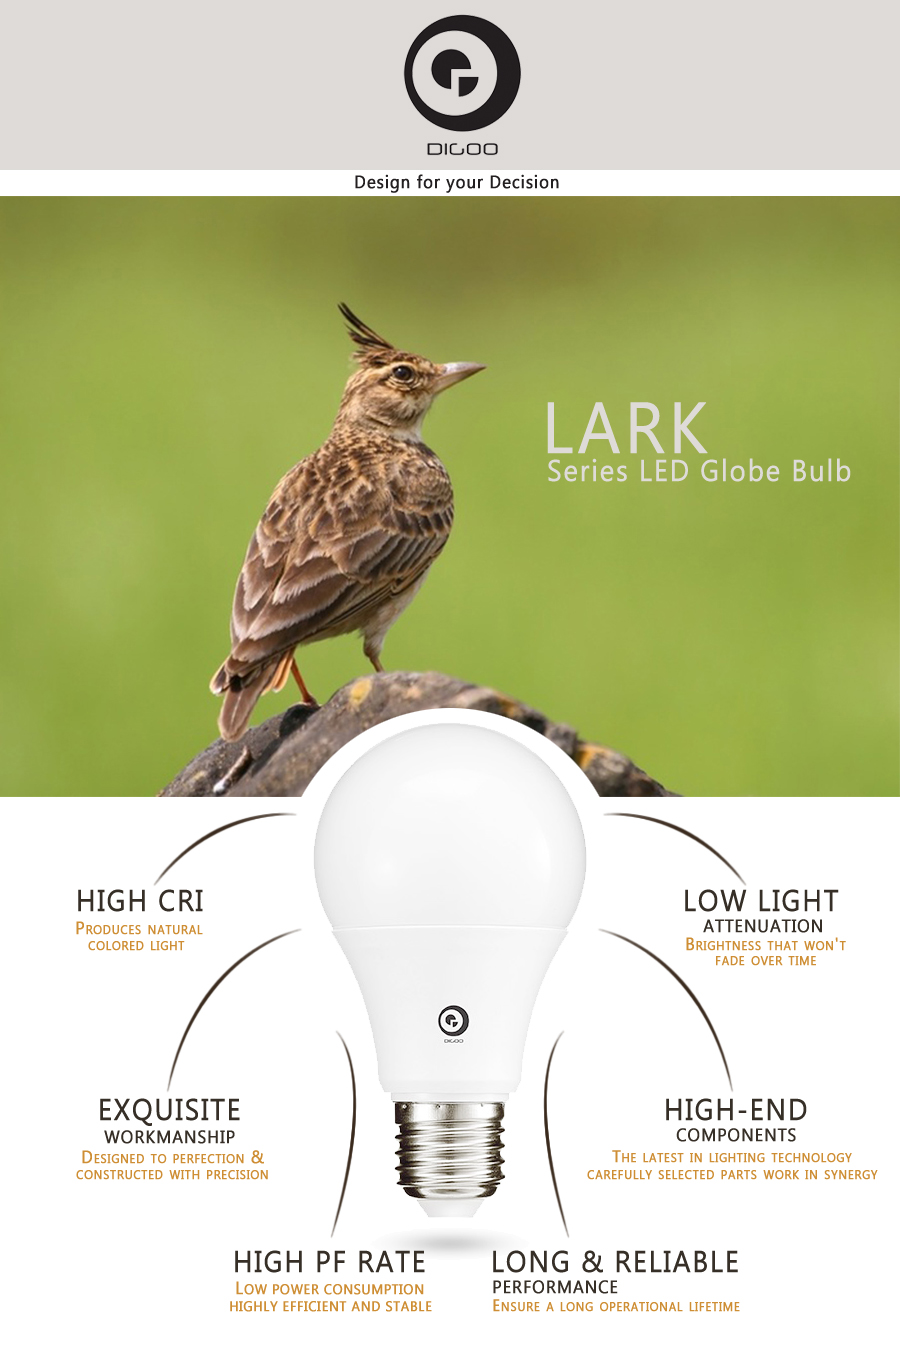 Digoo-Lark-Series-E27-E26-High-PF-Top-Quality-3W-5W-7W-LED-Globe-Bulb-Home-Lighting-AC85-265V-1060451